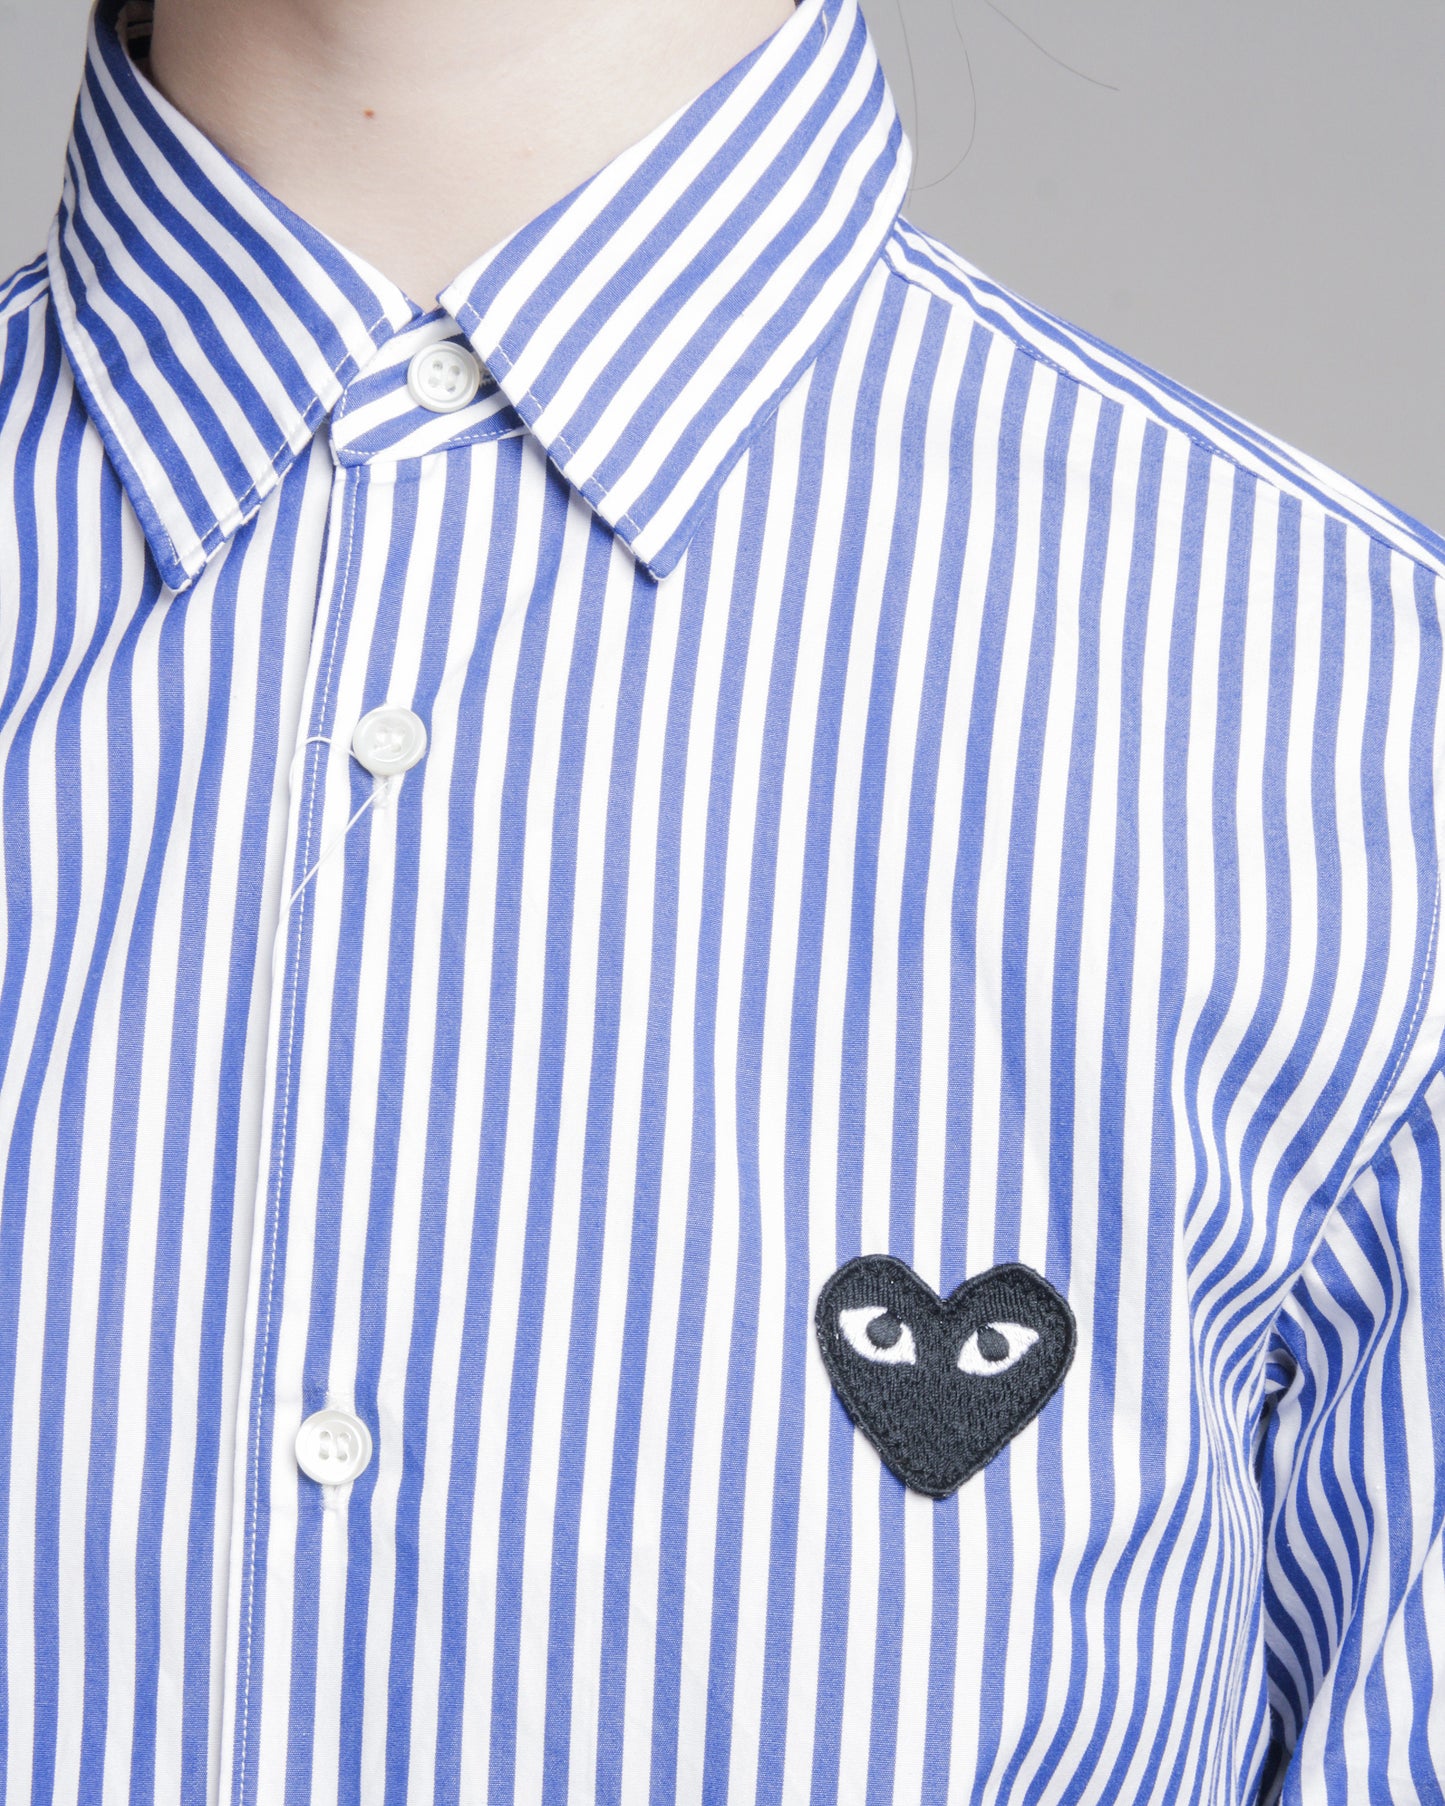 Blue Stripe Shirt with Black Heart